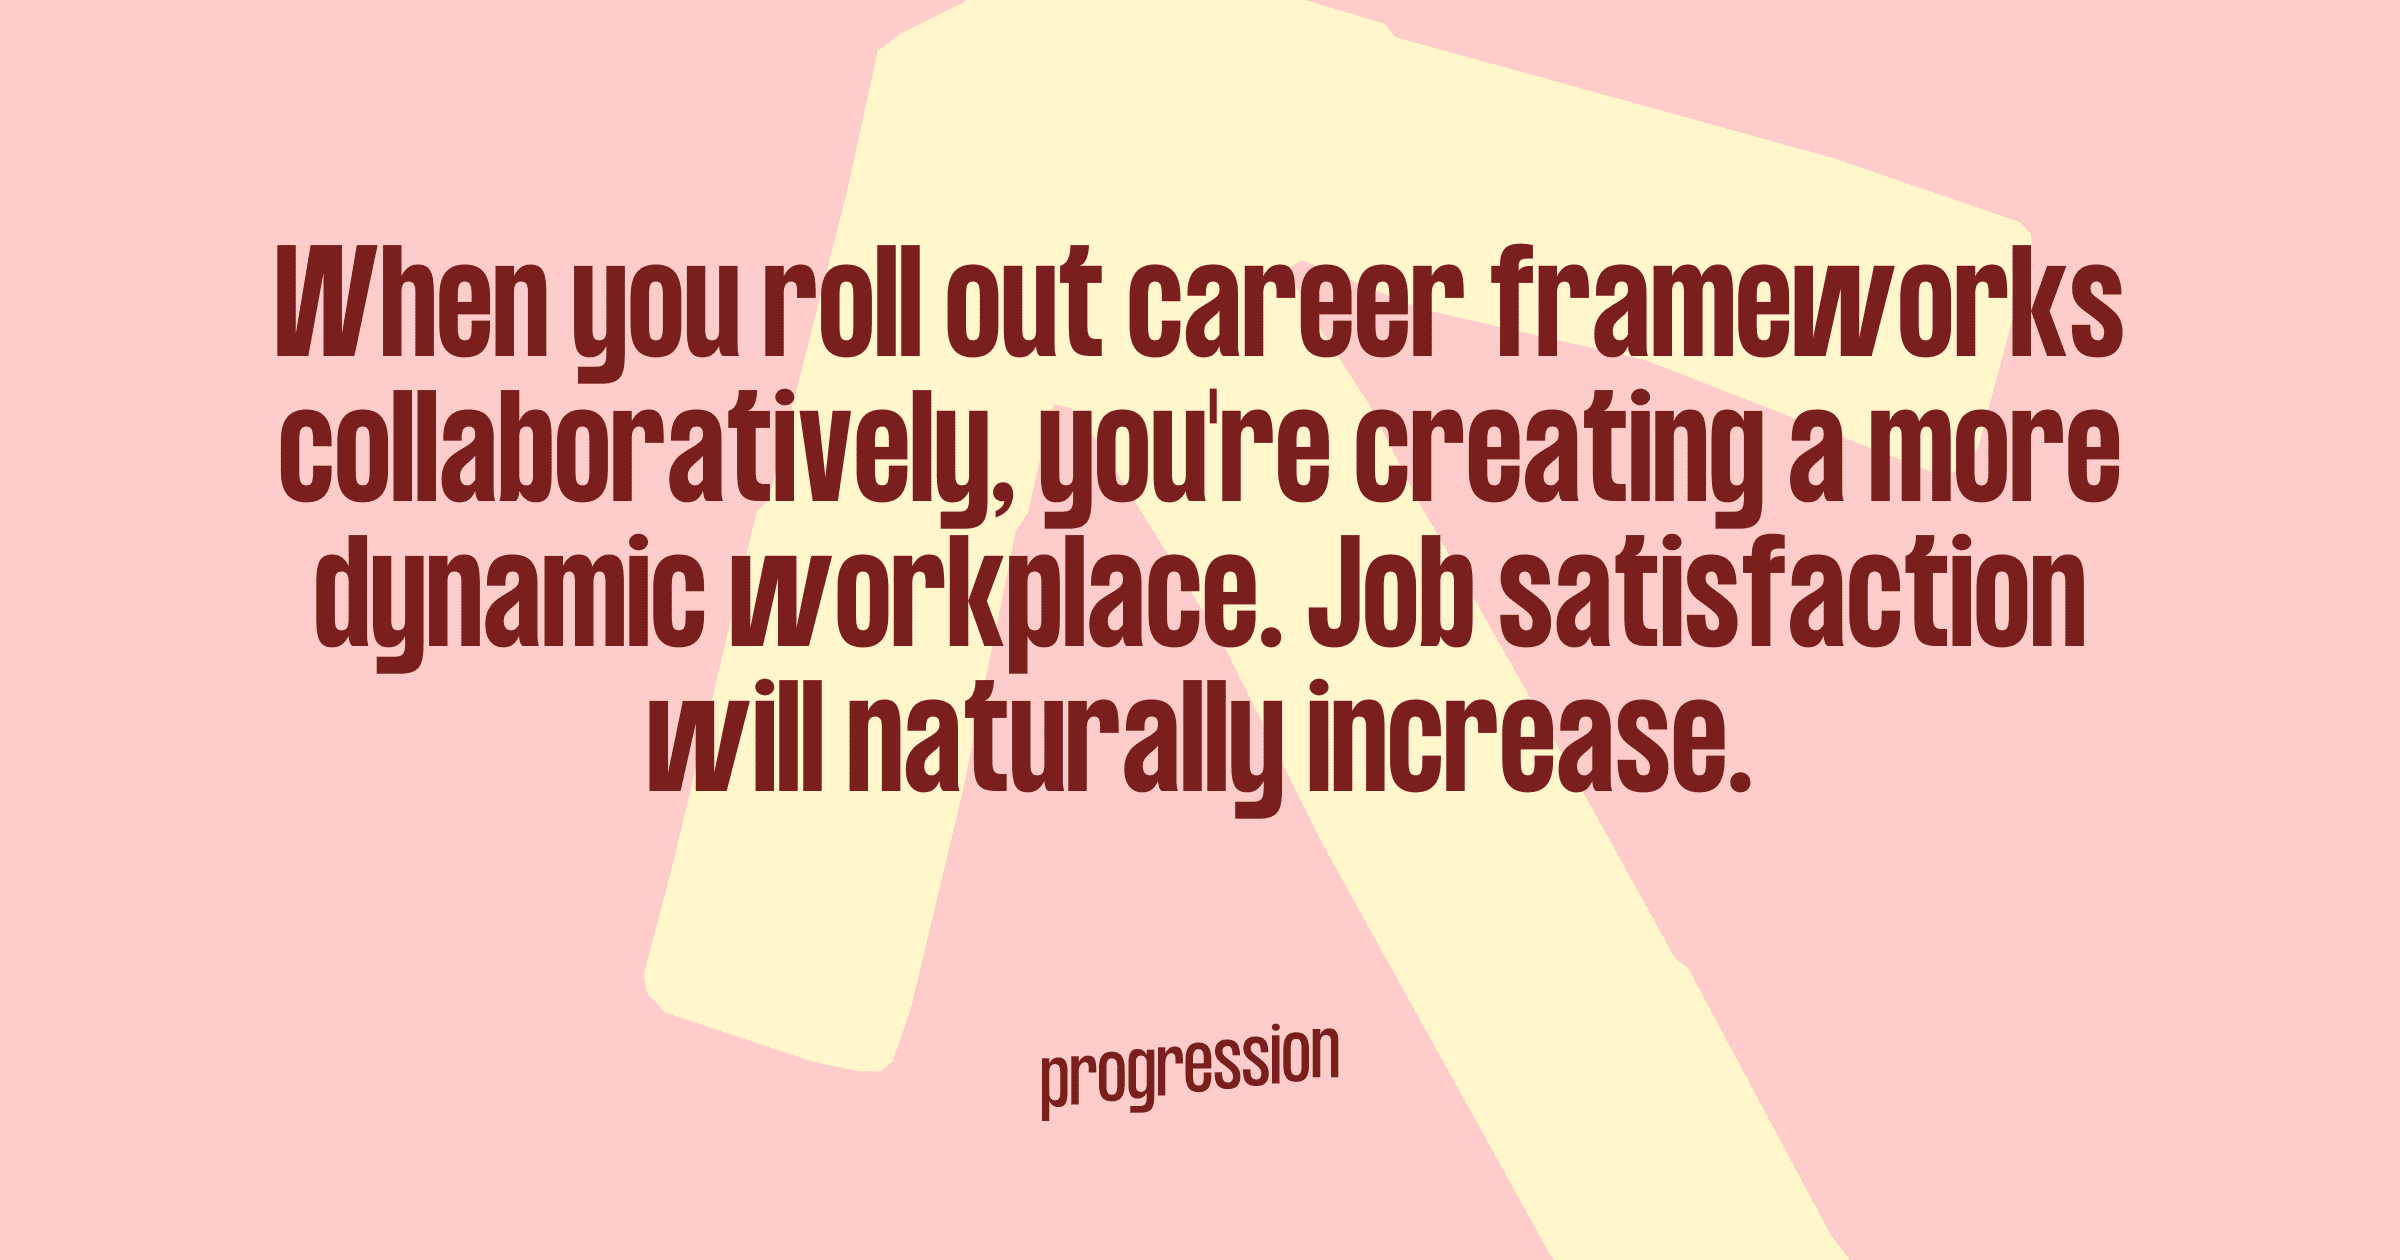 Graphic highlighting how career frameworks help increase job satisfaction